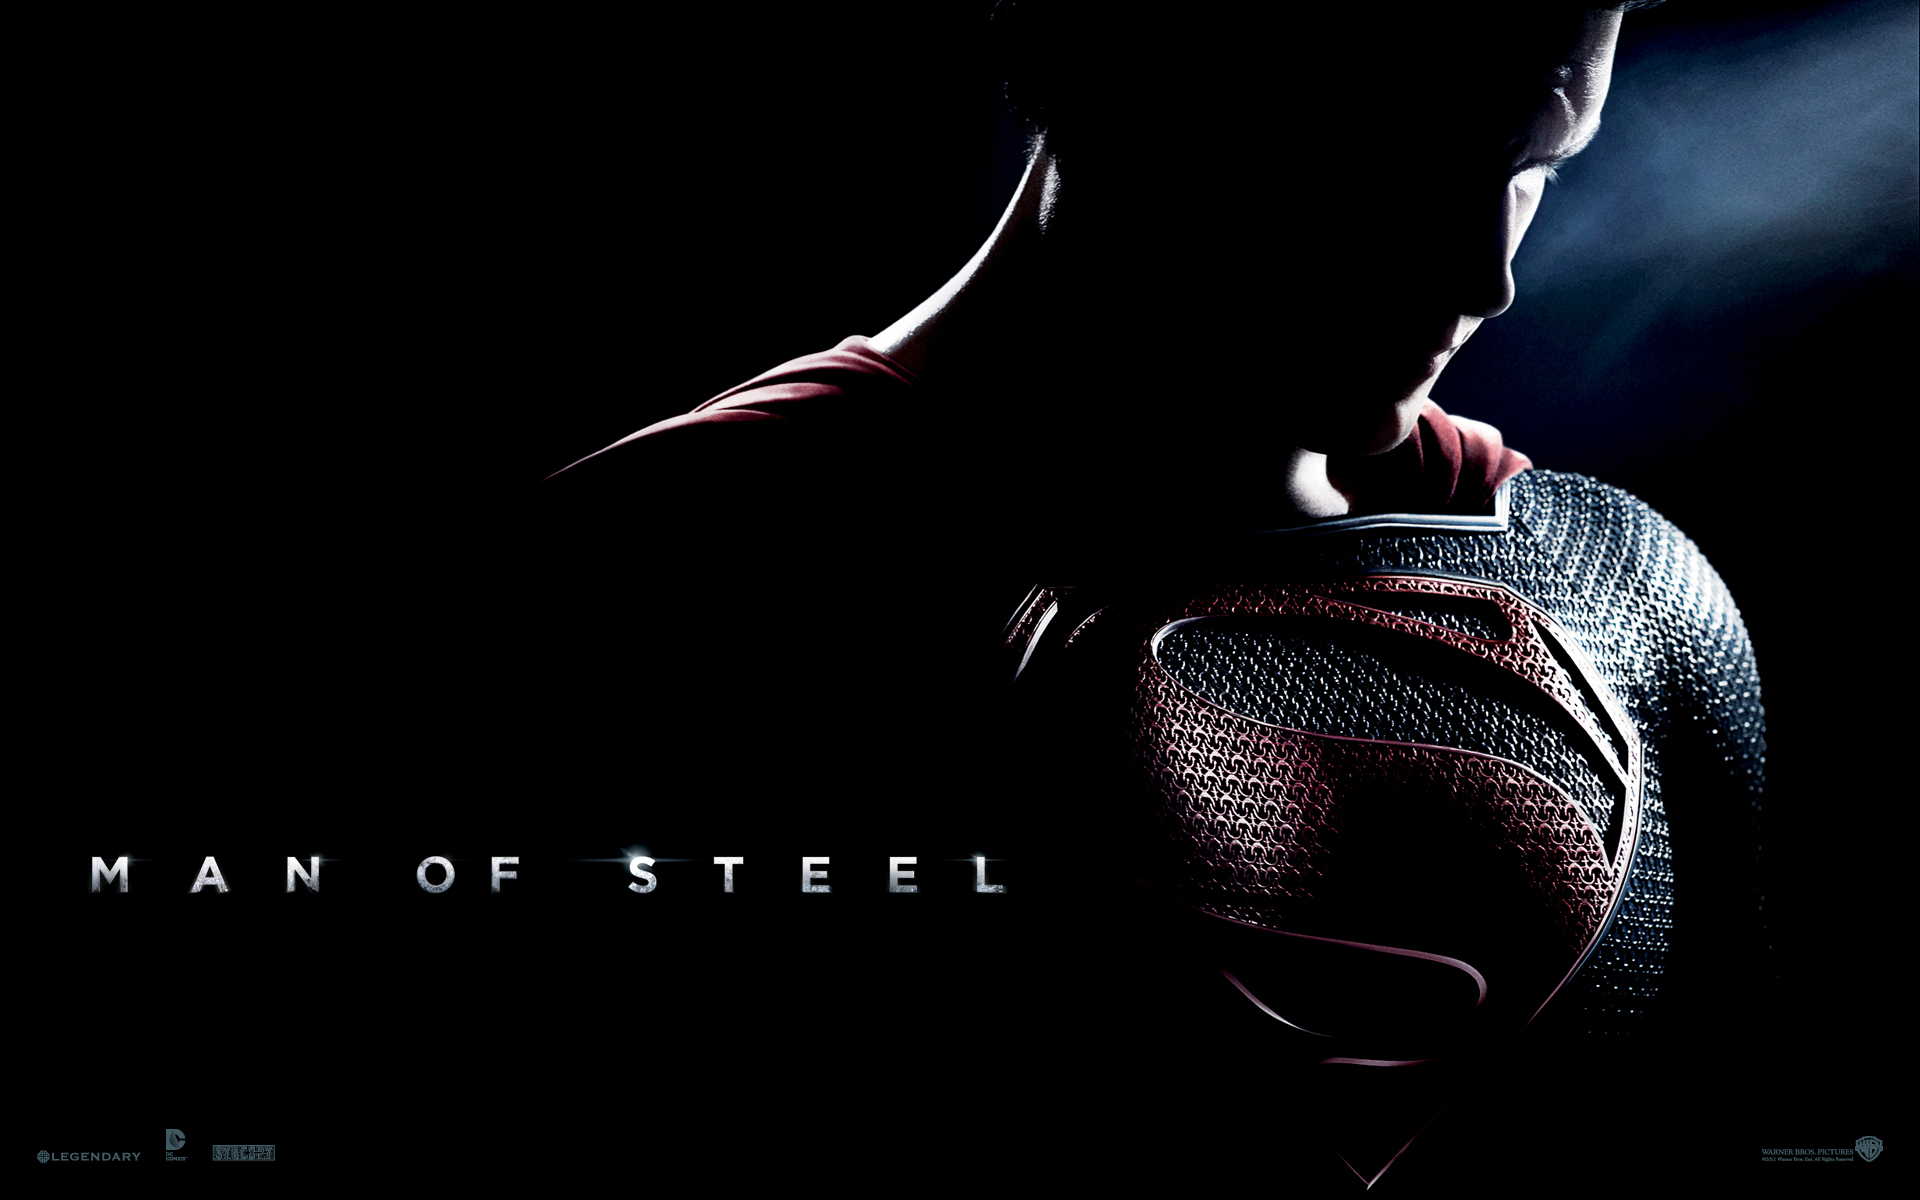 man of steel wallpaper,batman,fictional character,justice league,superhero,darkness